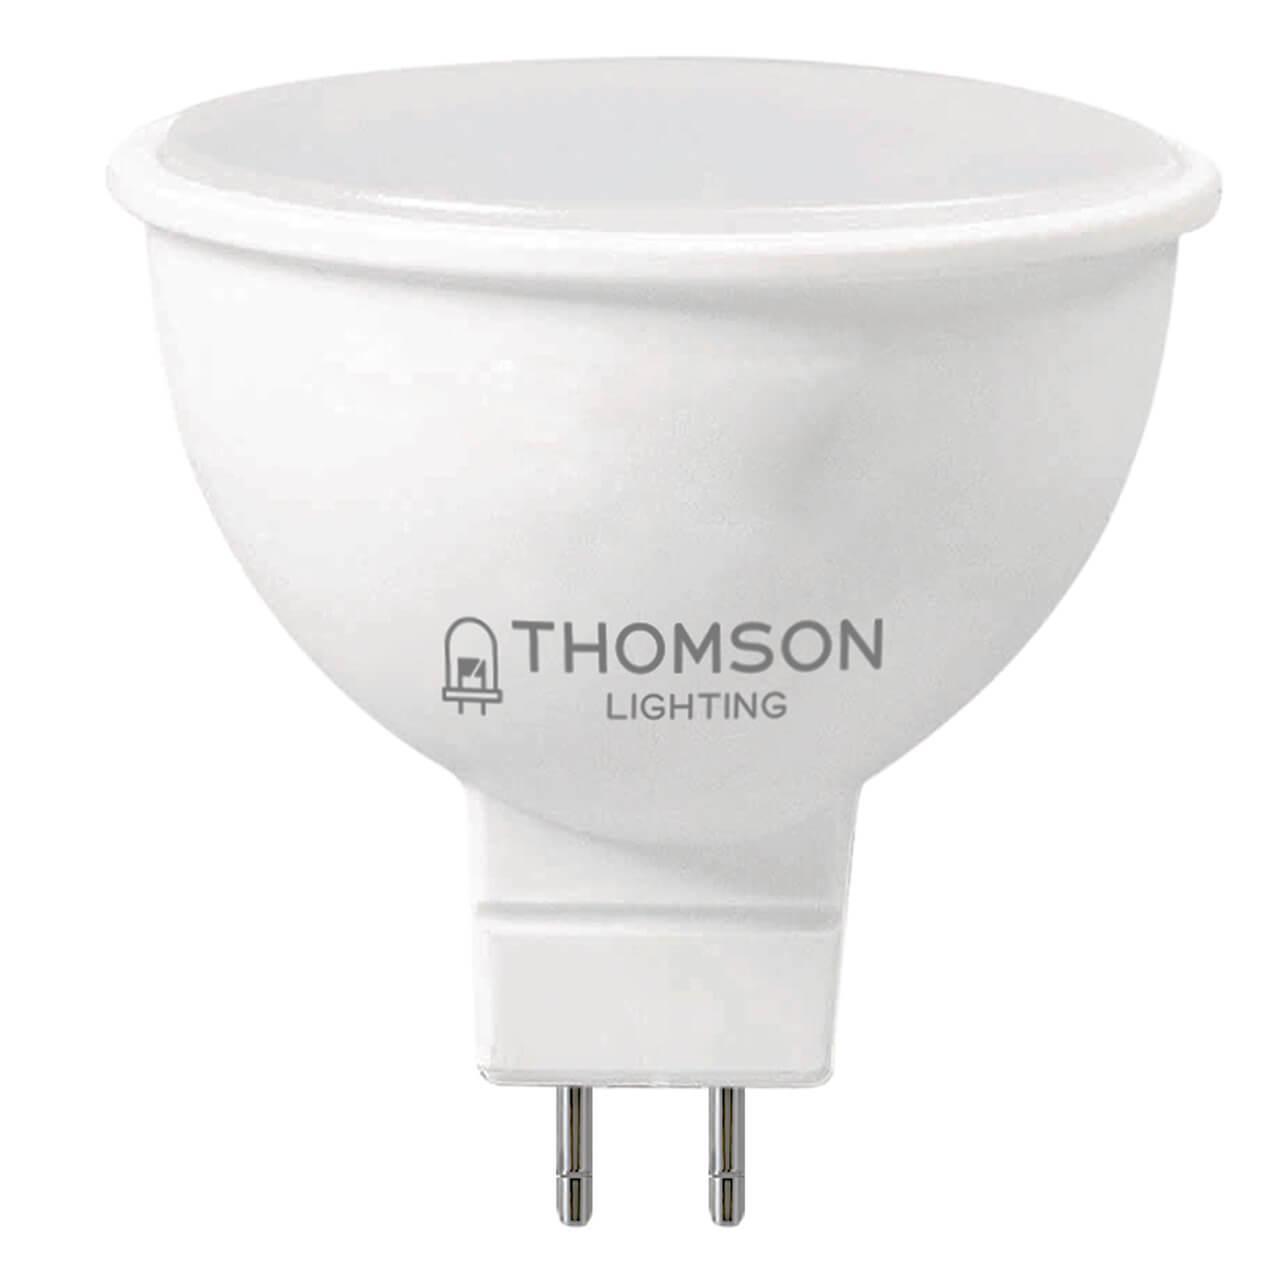 TH-B2321 Лампа светодиодная GU5.3 4W 6500K полусфера матовая Thomson